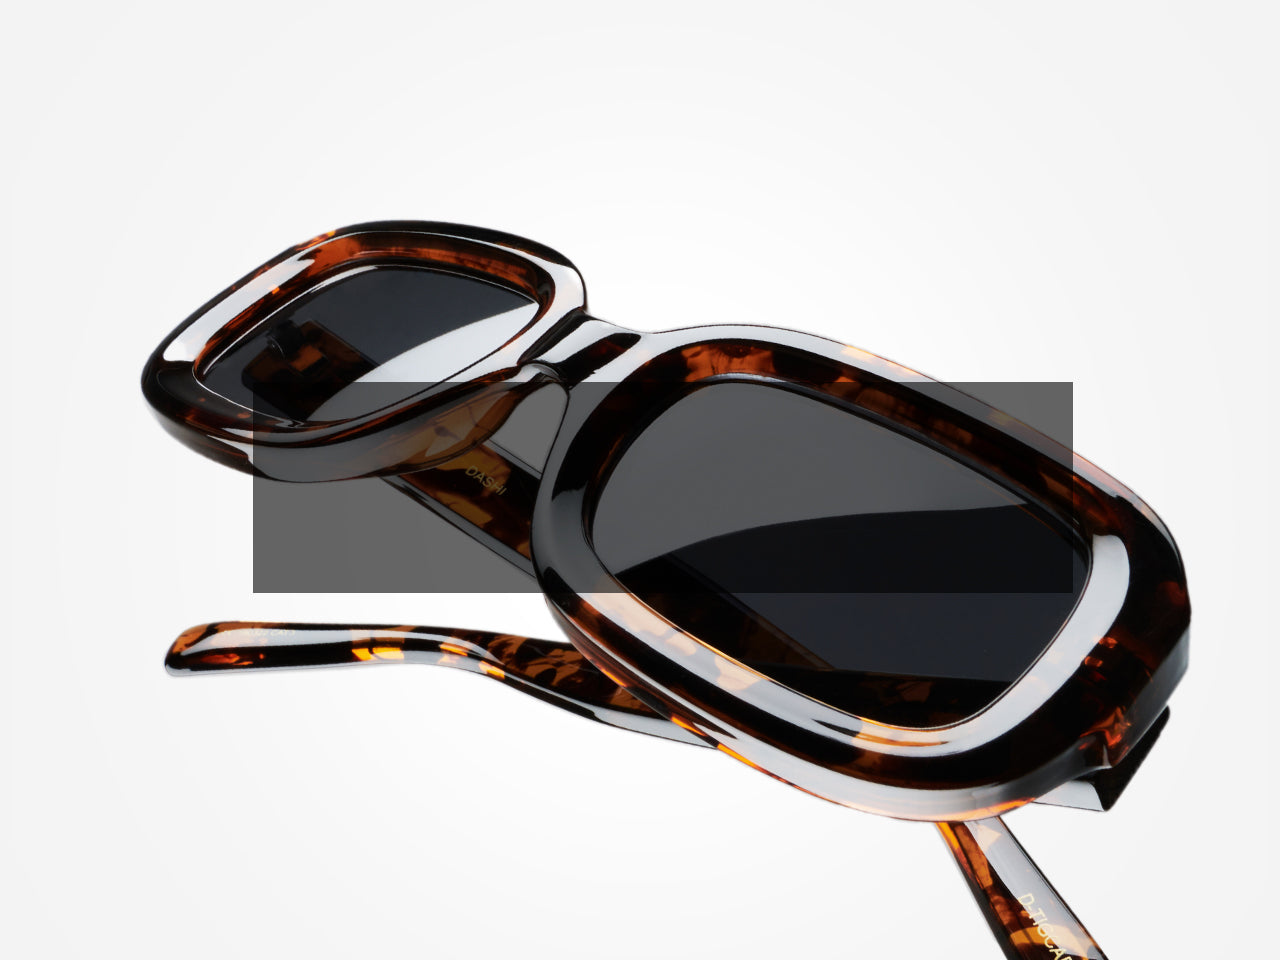 MELLER | Official Website - Sunglasses, Watches & Accessories